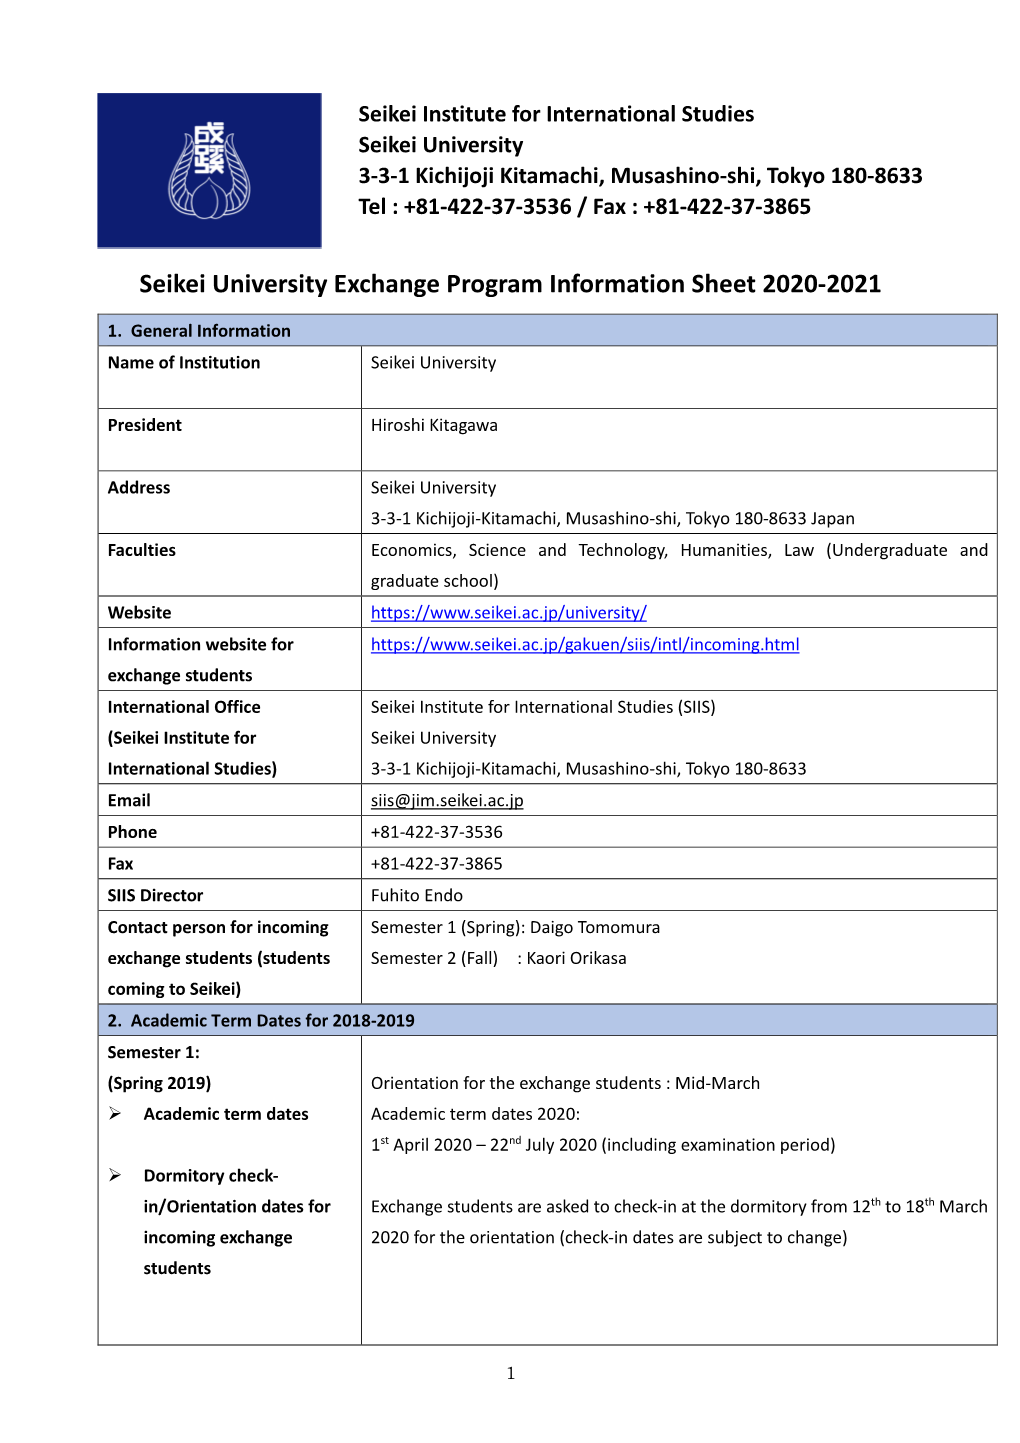 Seikei University Exchange Program Information Sheet 2020-2021